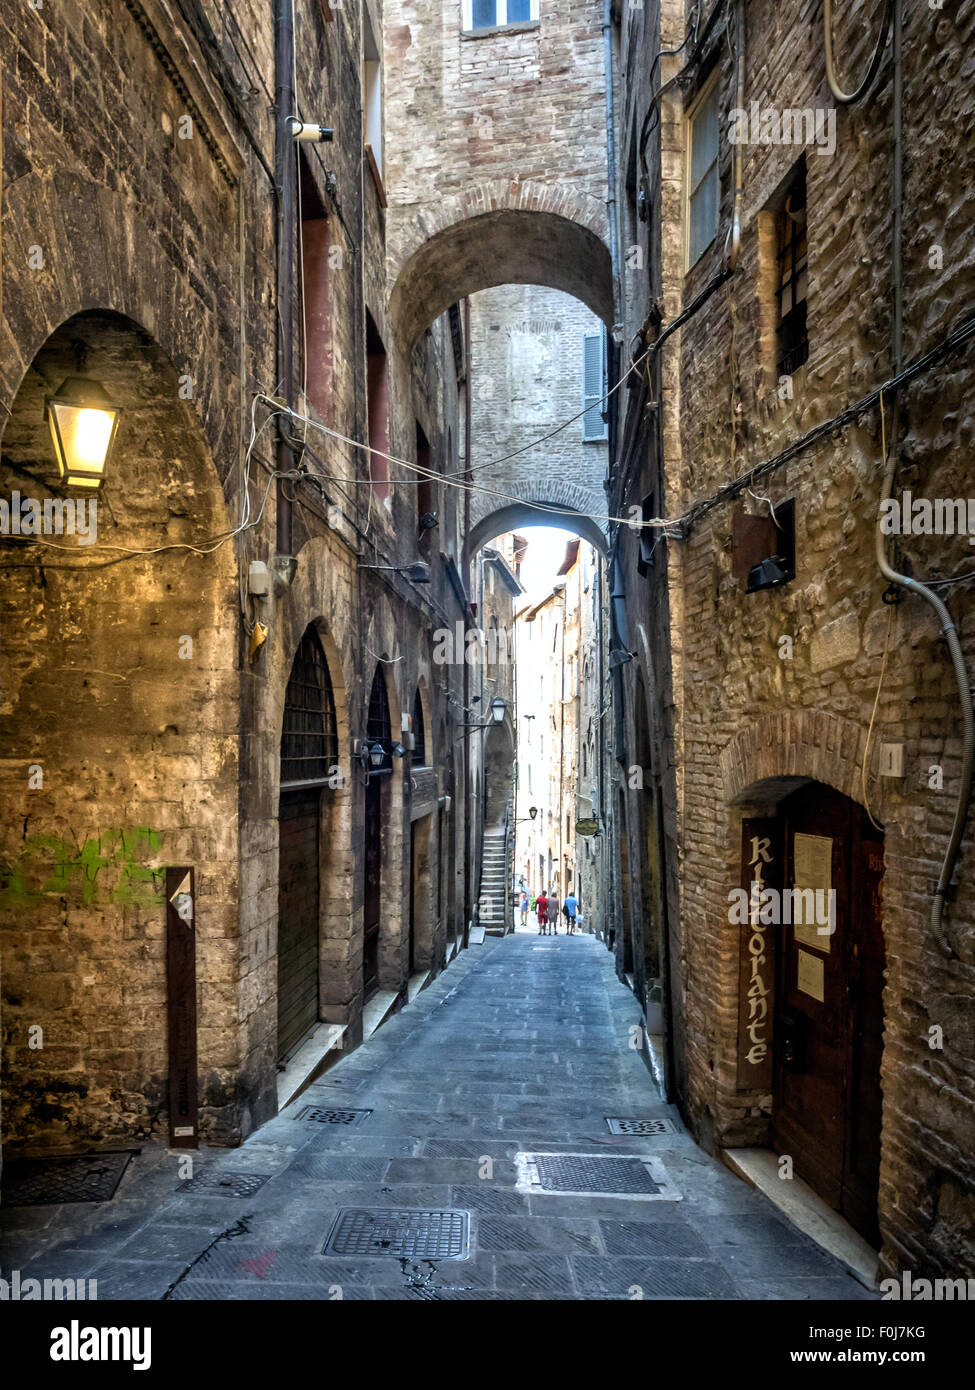 Narrow street with arches in Perugia, Umbria Italy Stock Photo - Alamy